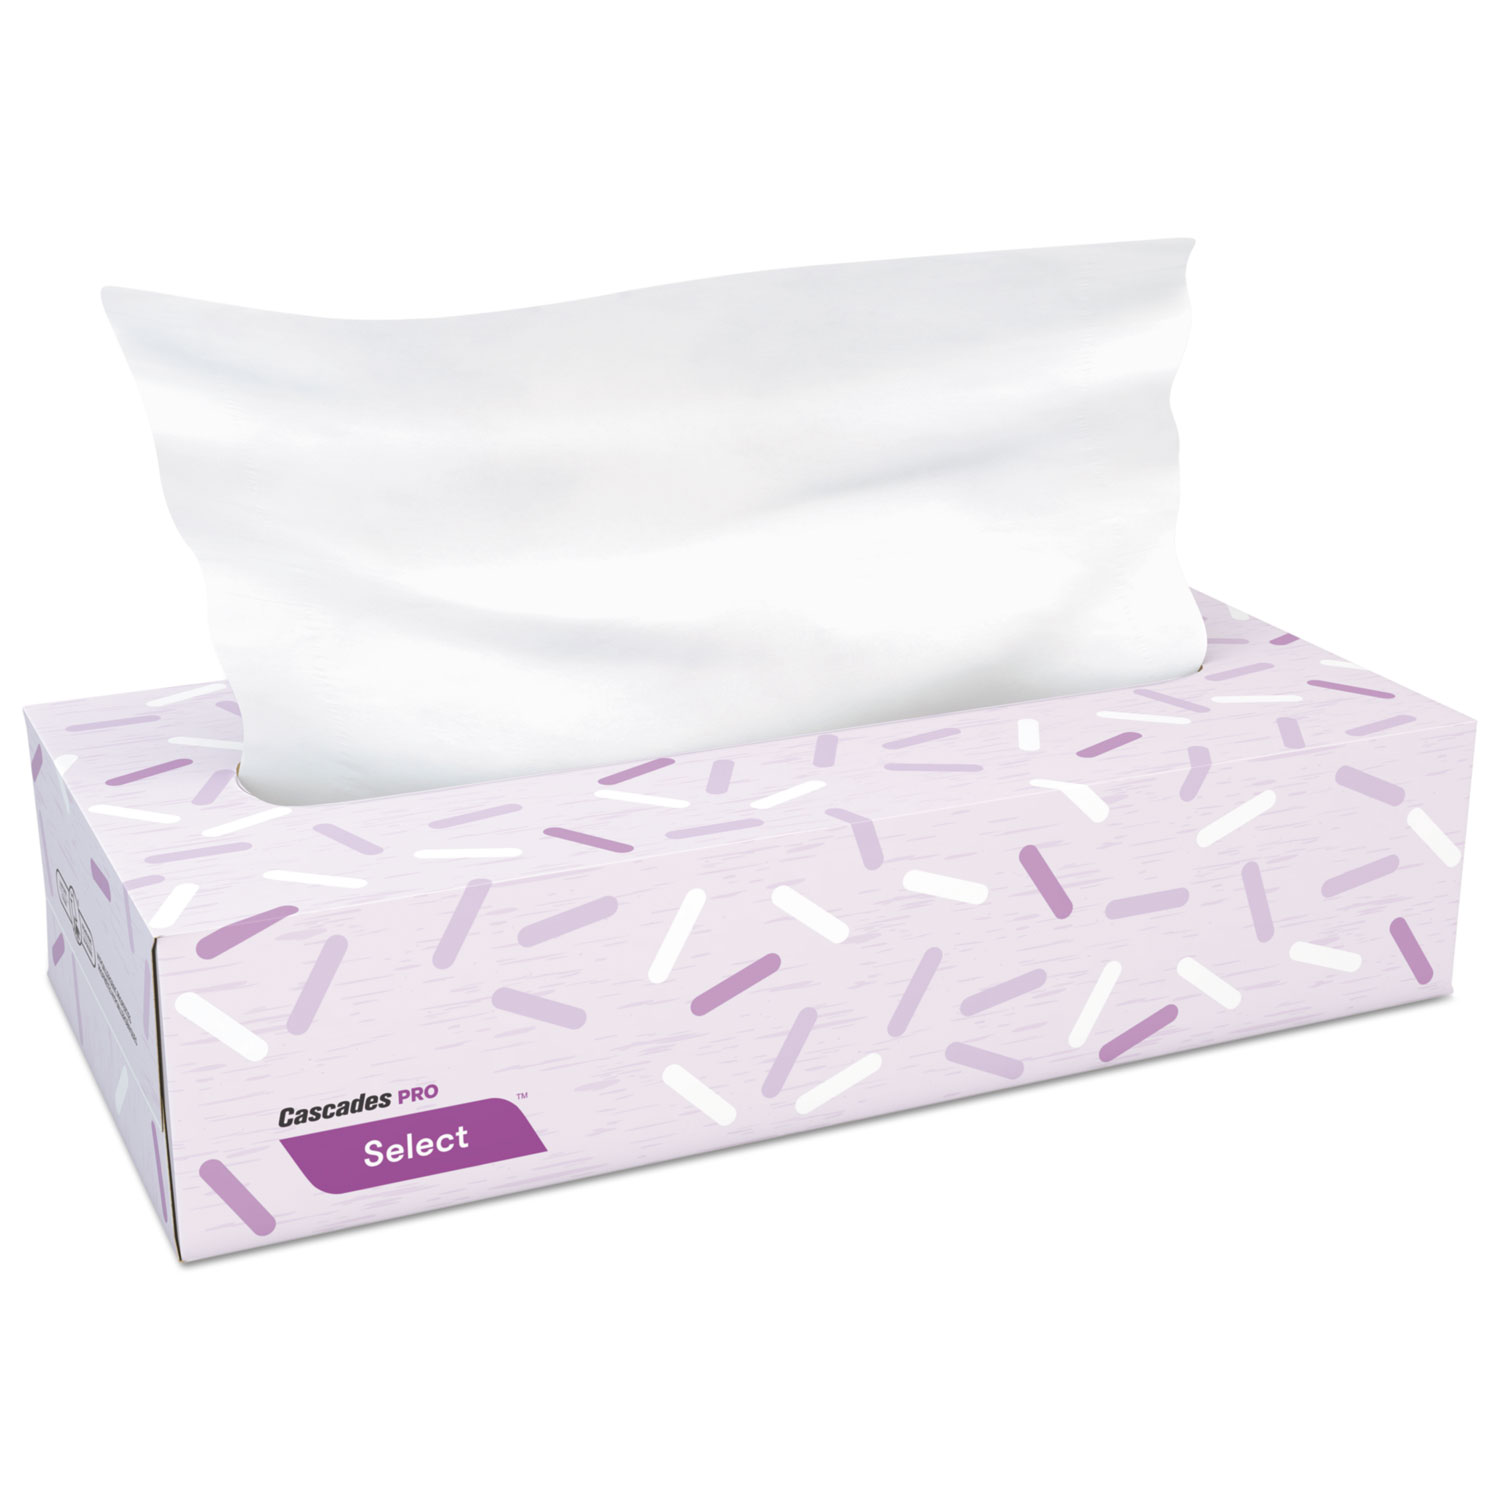 Select Flat Box Facial Tissue, 2-Ply, White, 8 x 7 3/8, 100/Box, 30 Box/Carton